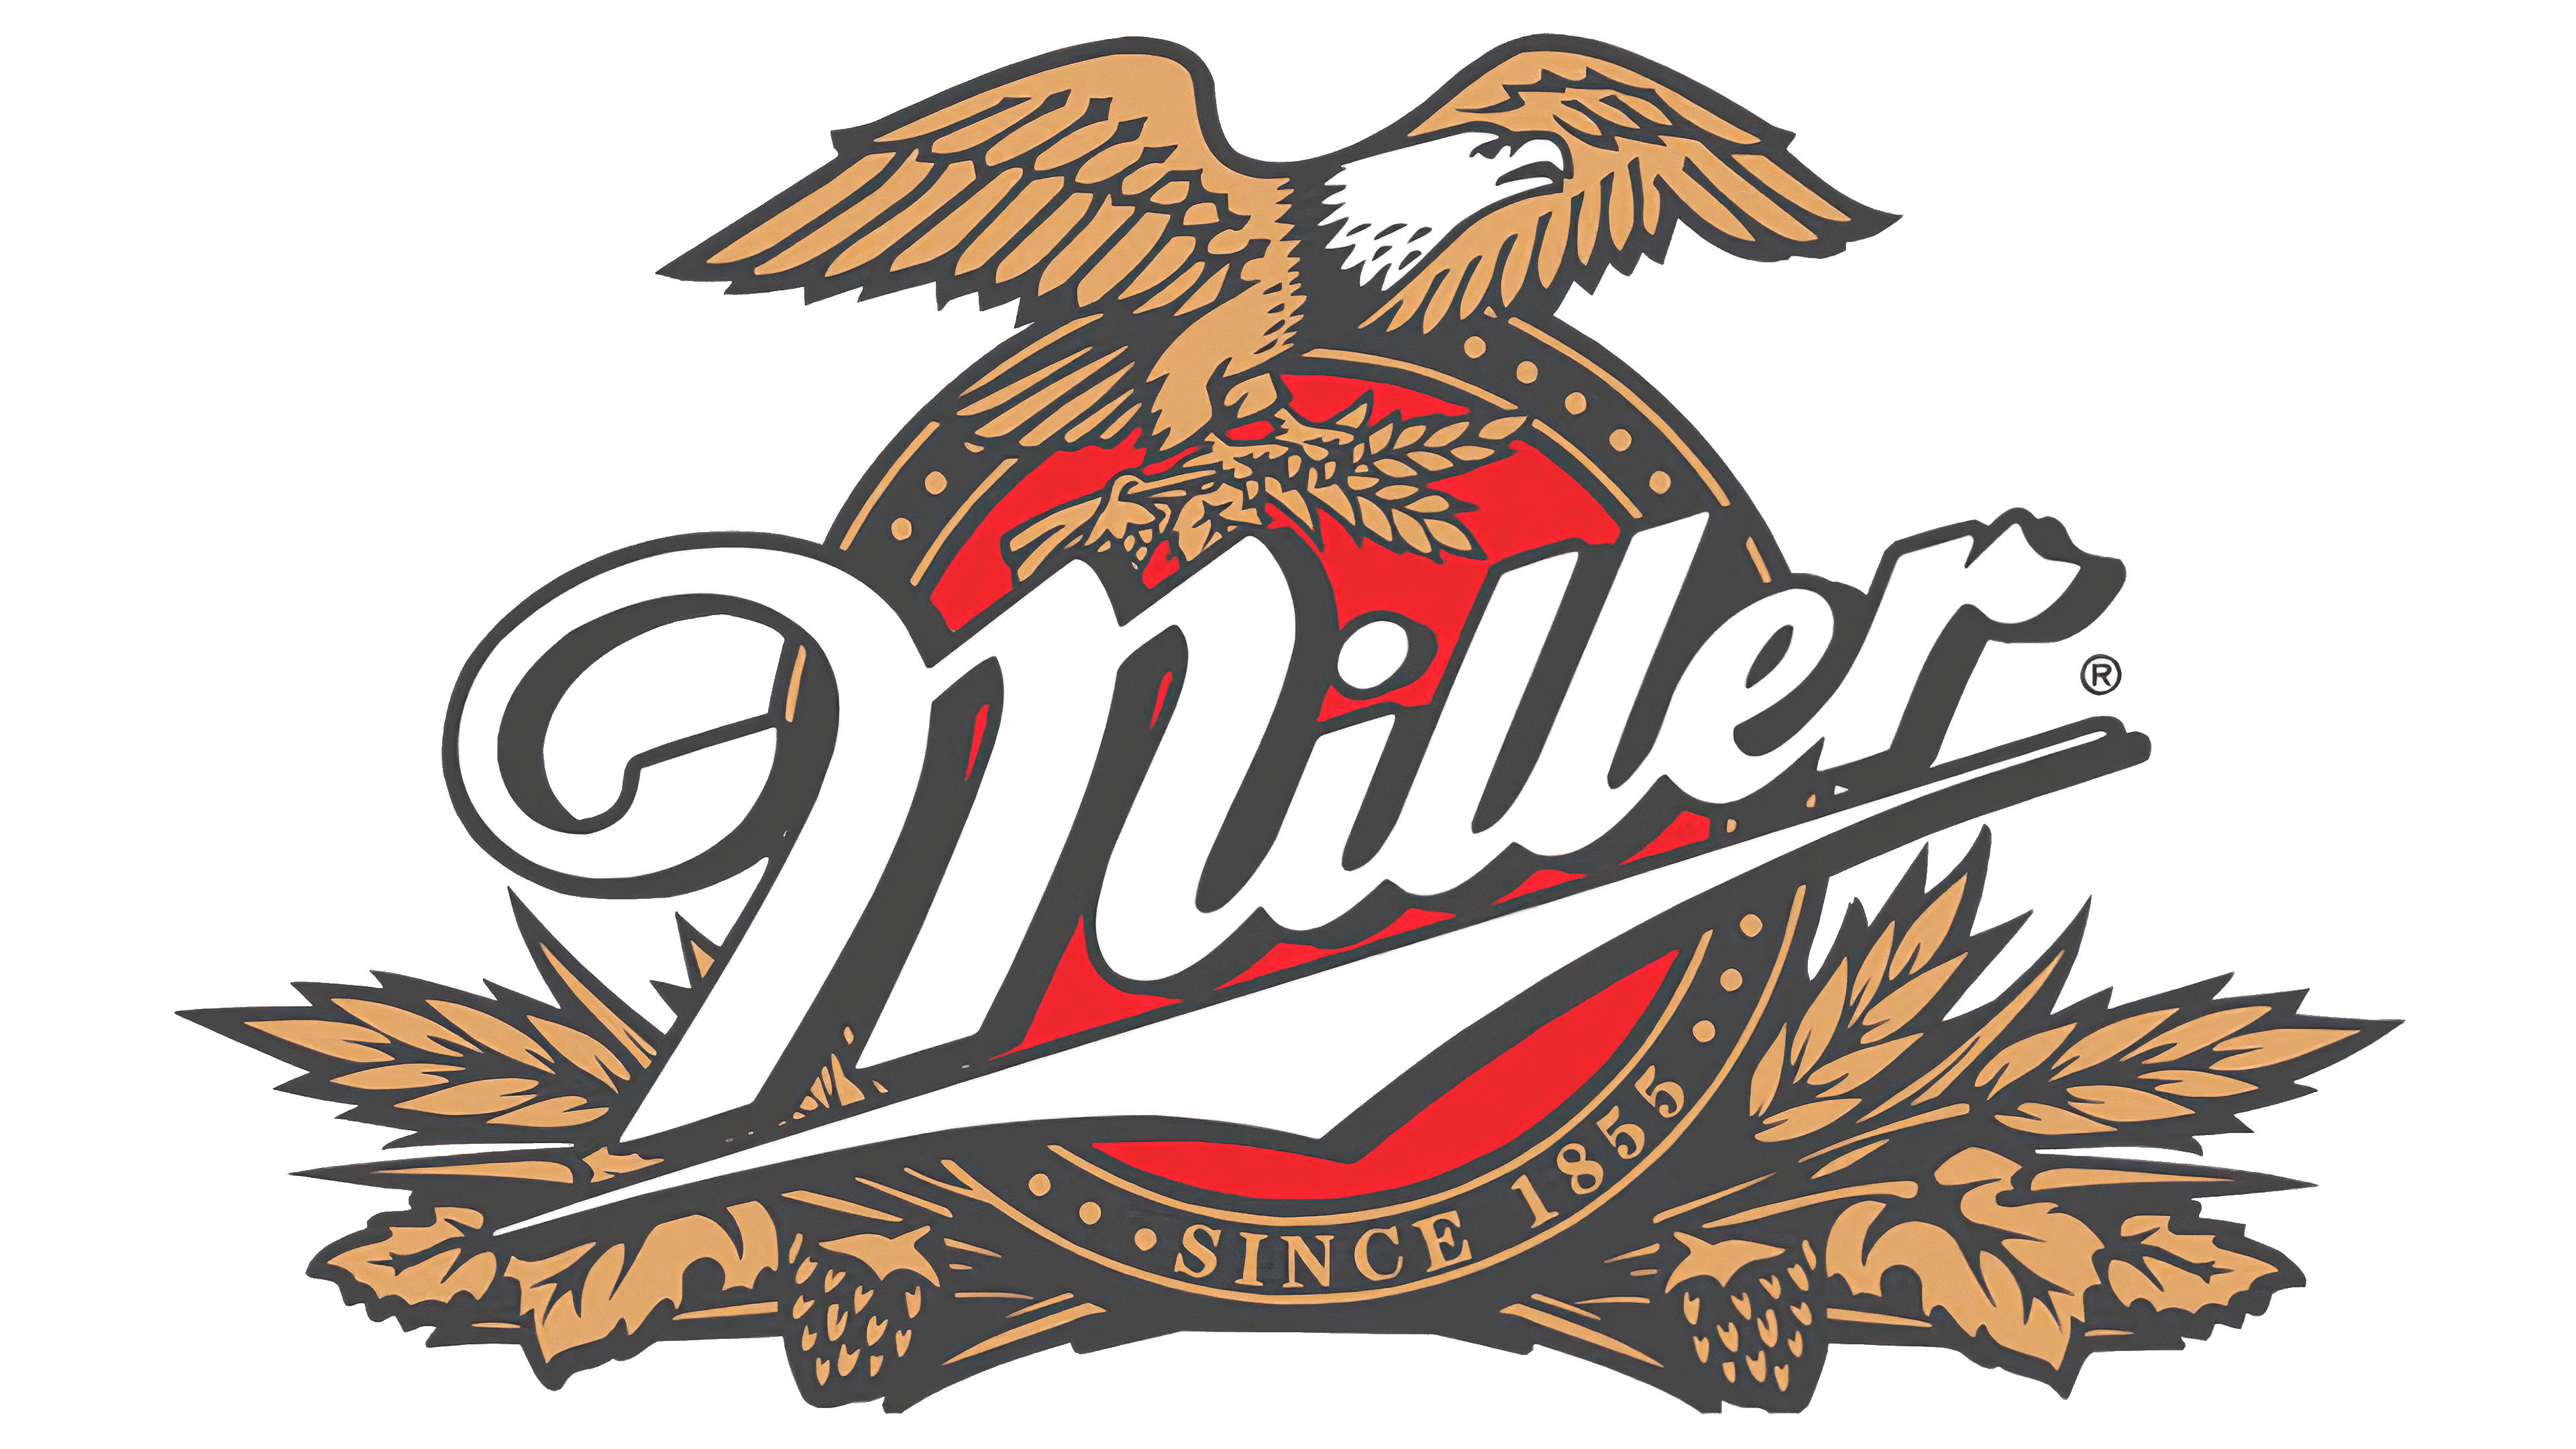 Lite-Beer-Logo - Sussex County Miners